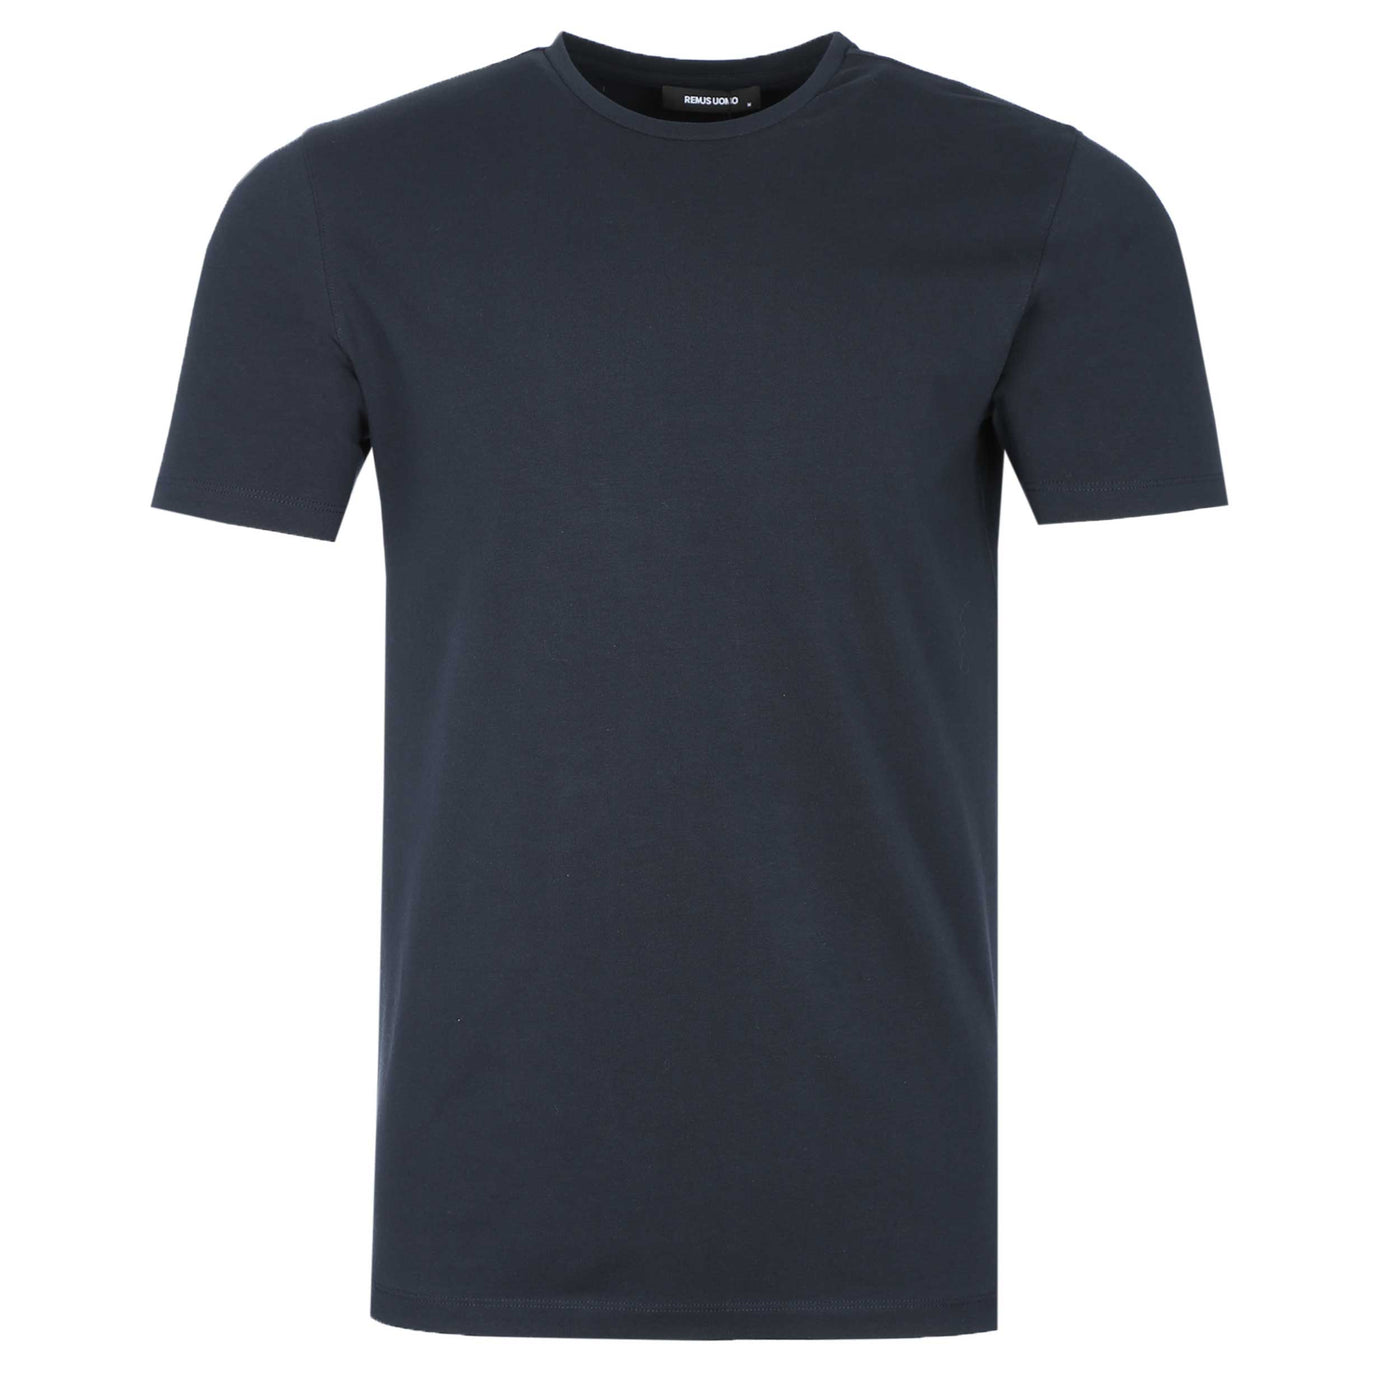 Remus Uomo Basic Crew Neck T-Shirt in Navy